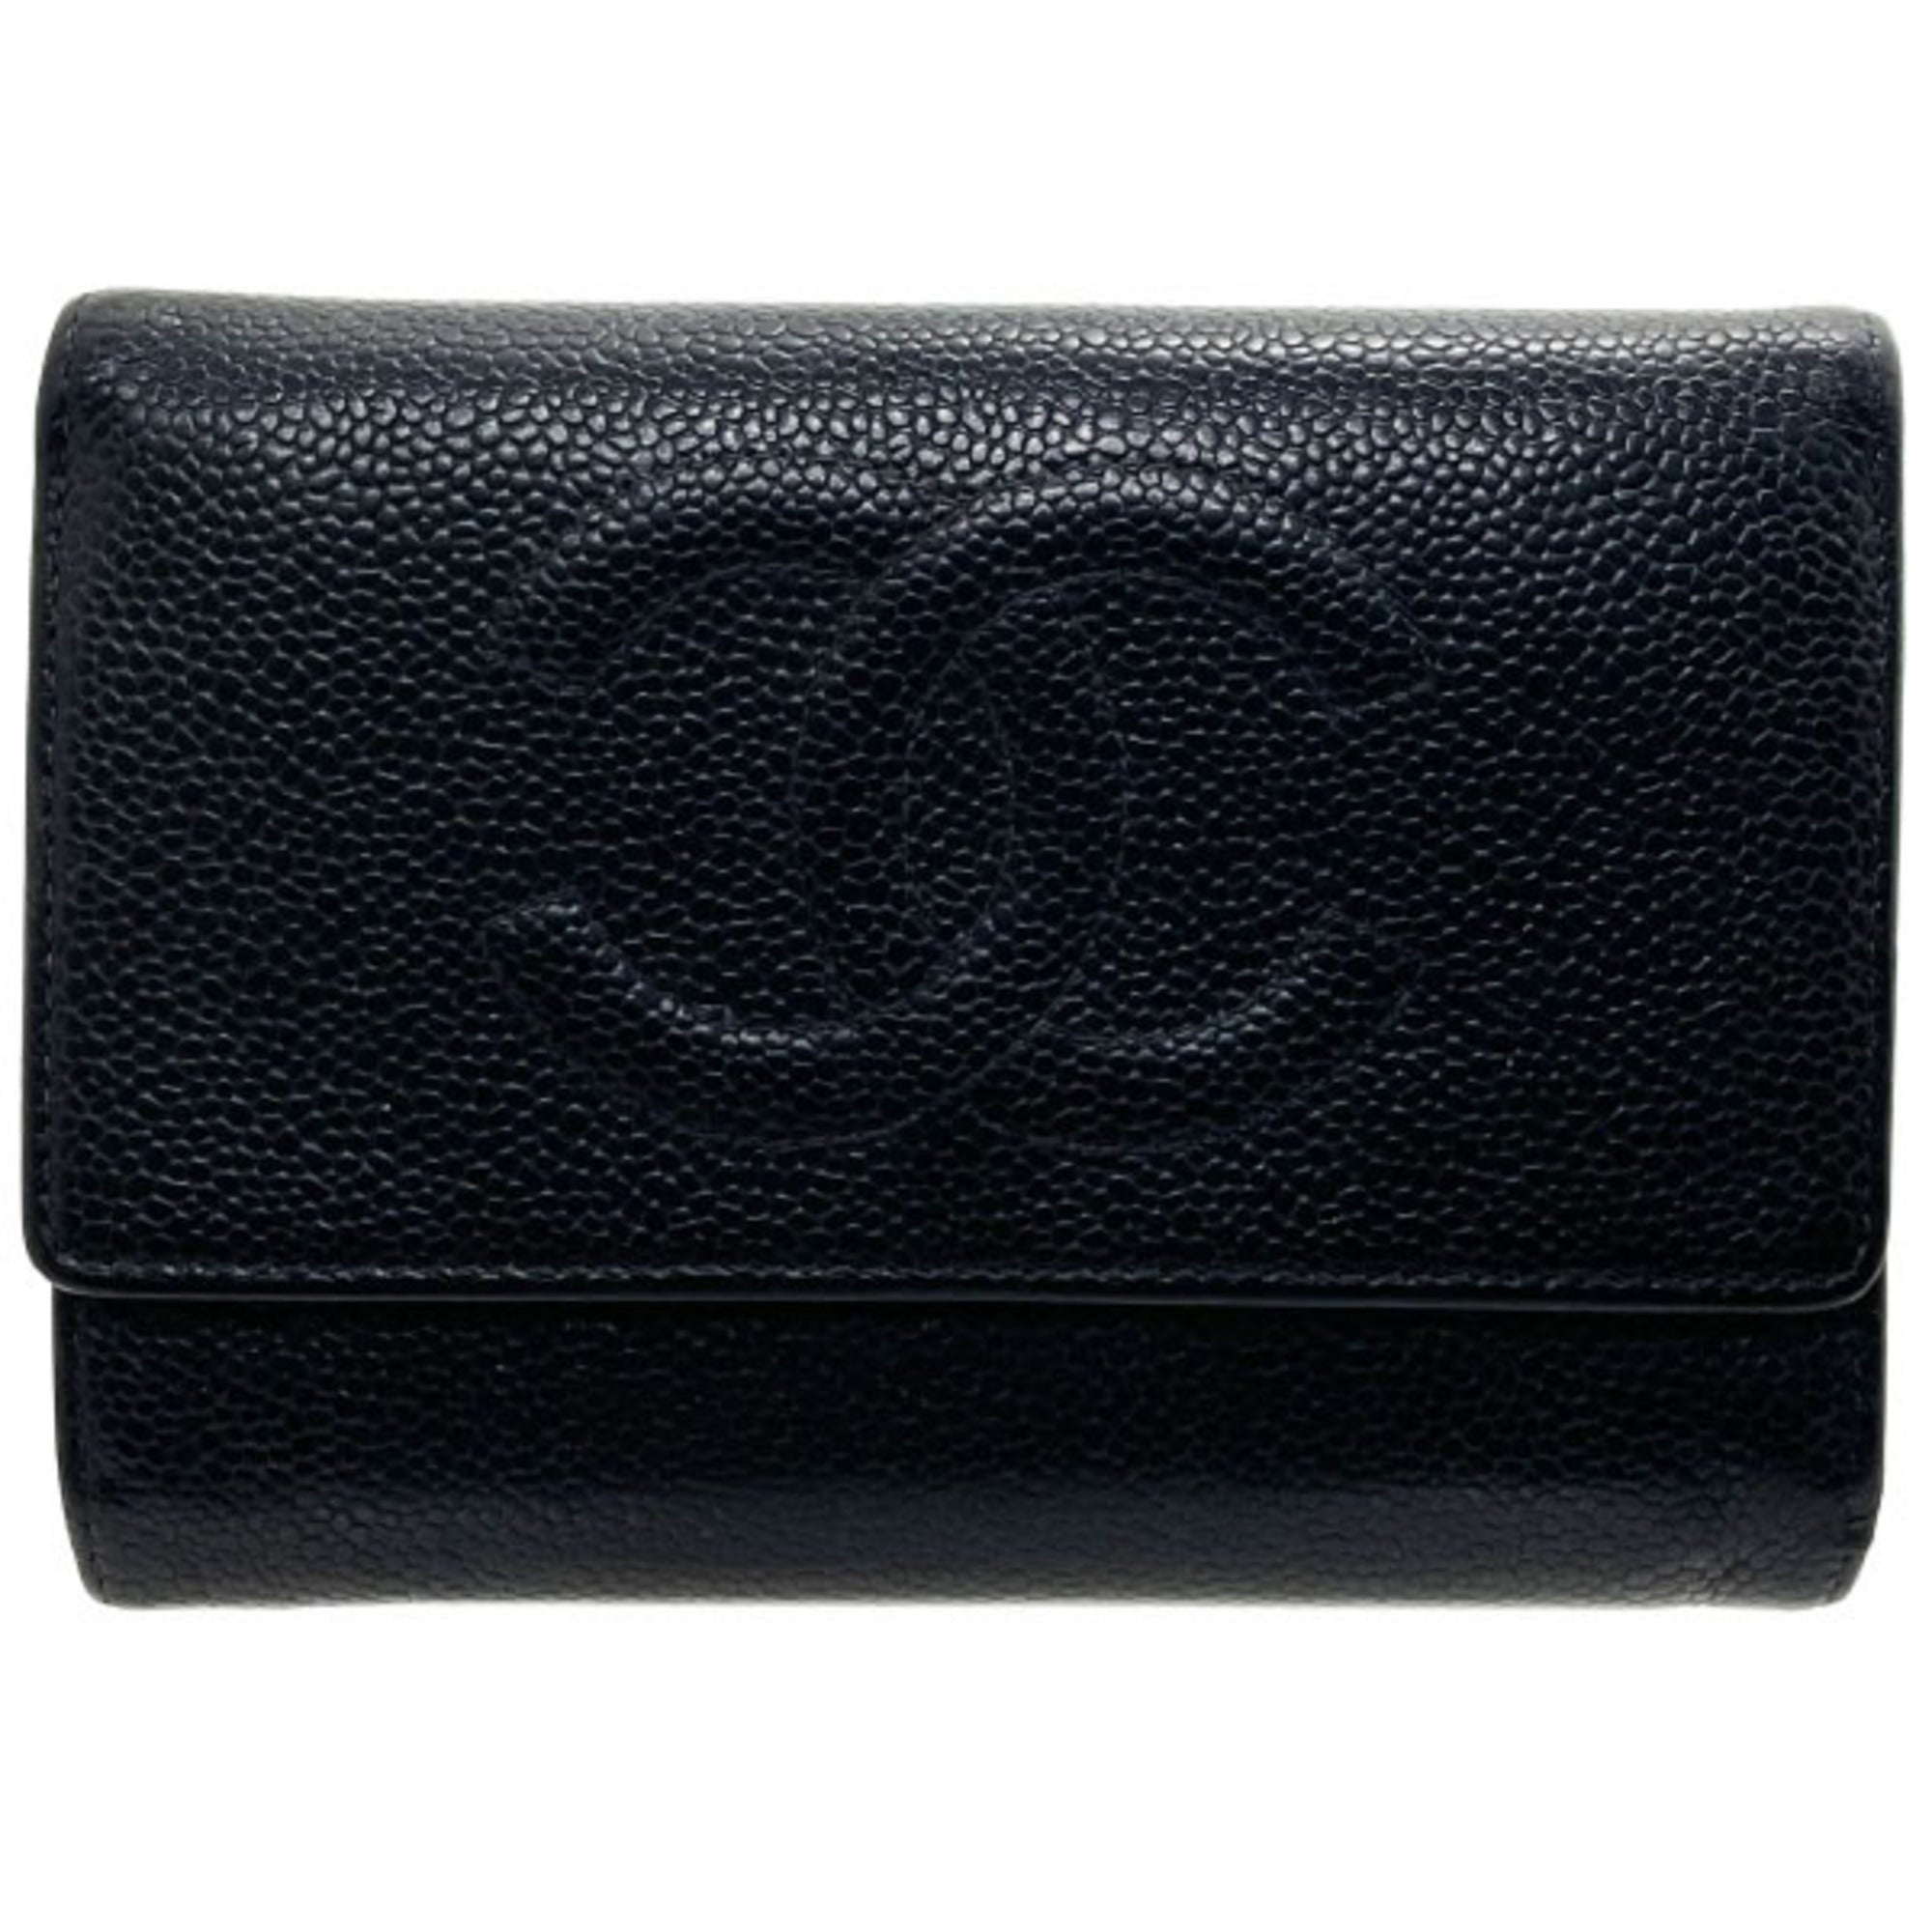 Wallet Mark Trifold Caviar Leather Black A13225 CC Medium Middle Women's RR-13147